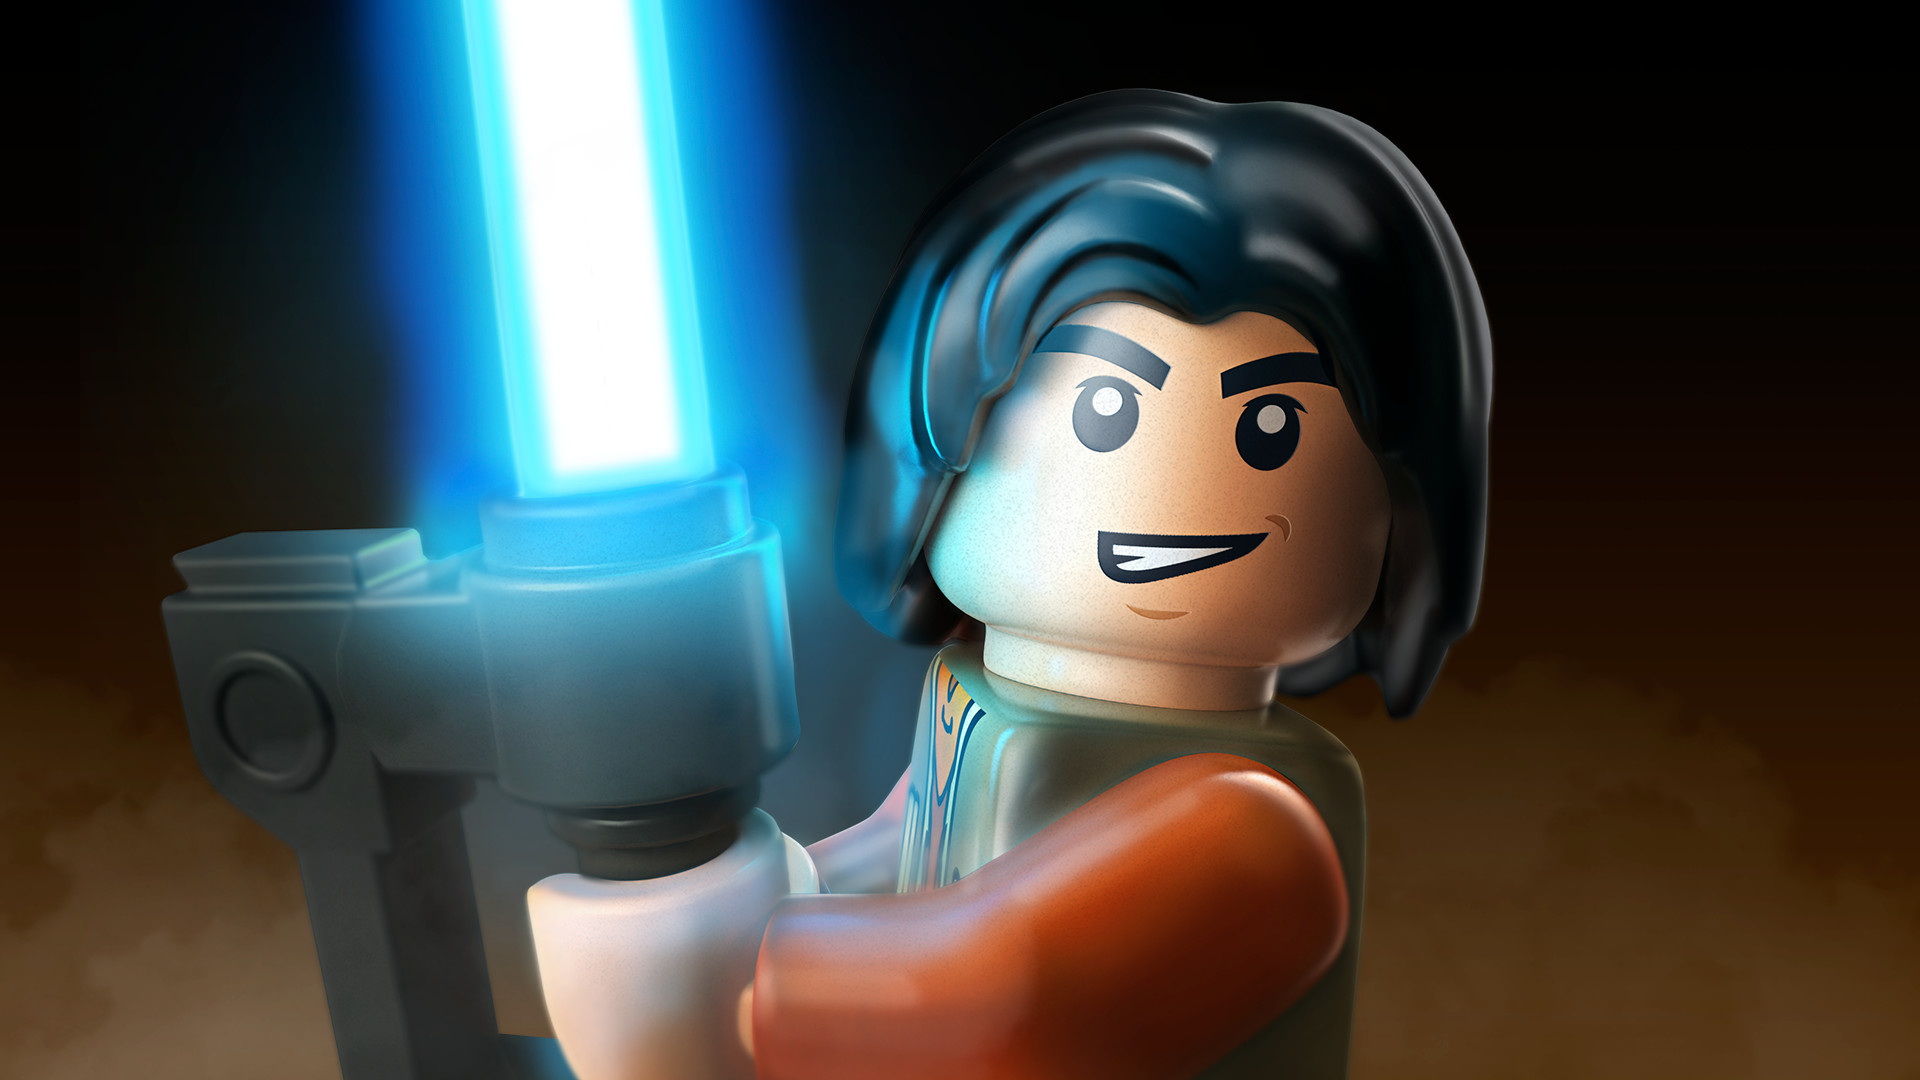 LEGO Star Wars: The Force Awakens - Rebels Character Pack DLC Steam CD Key 1.68 $